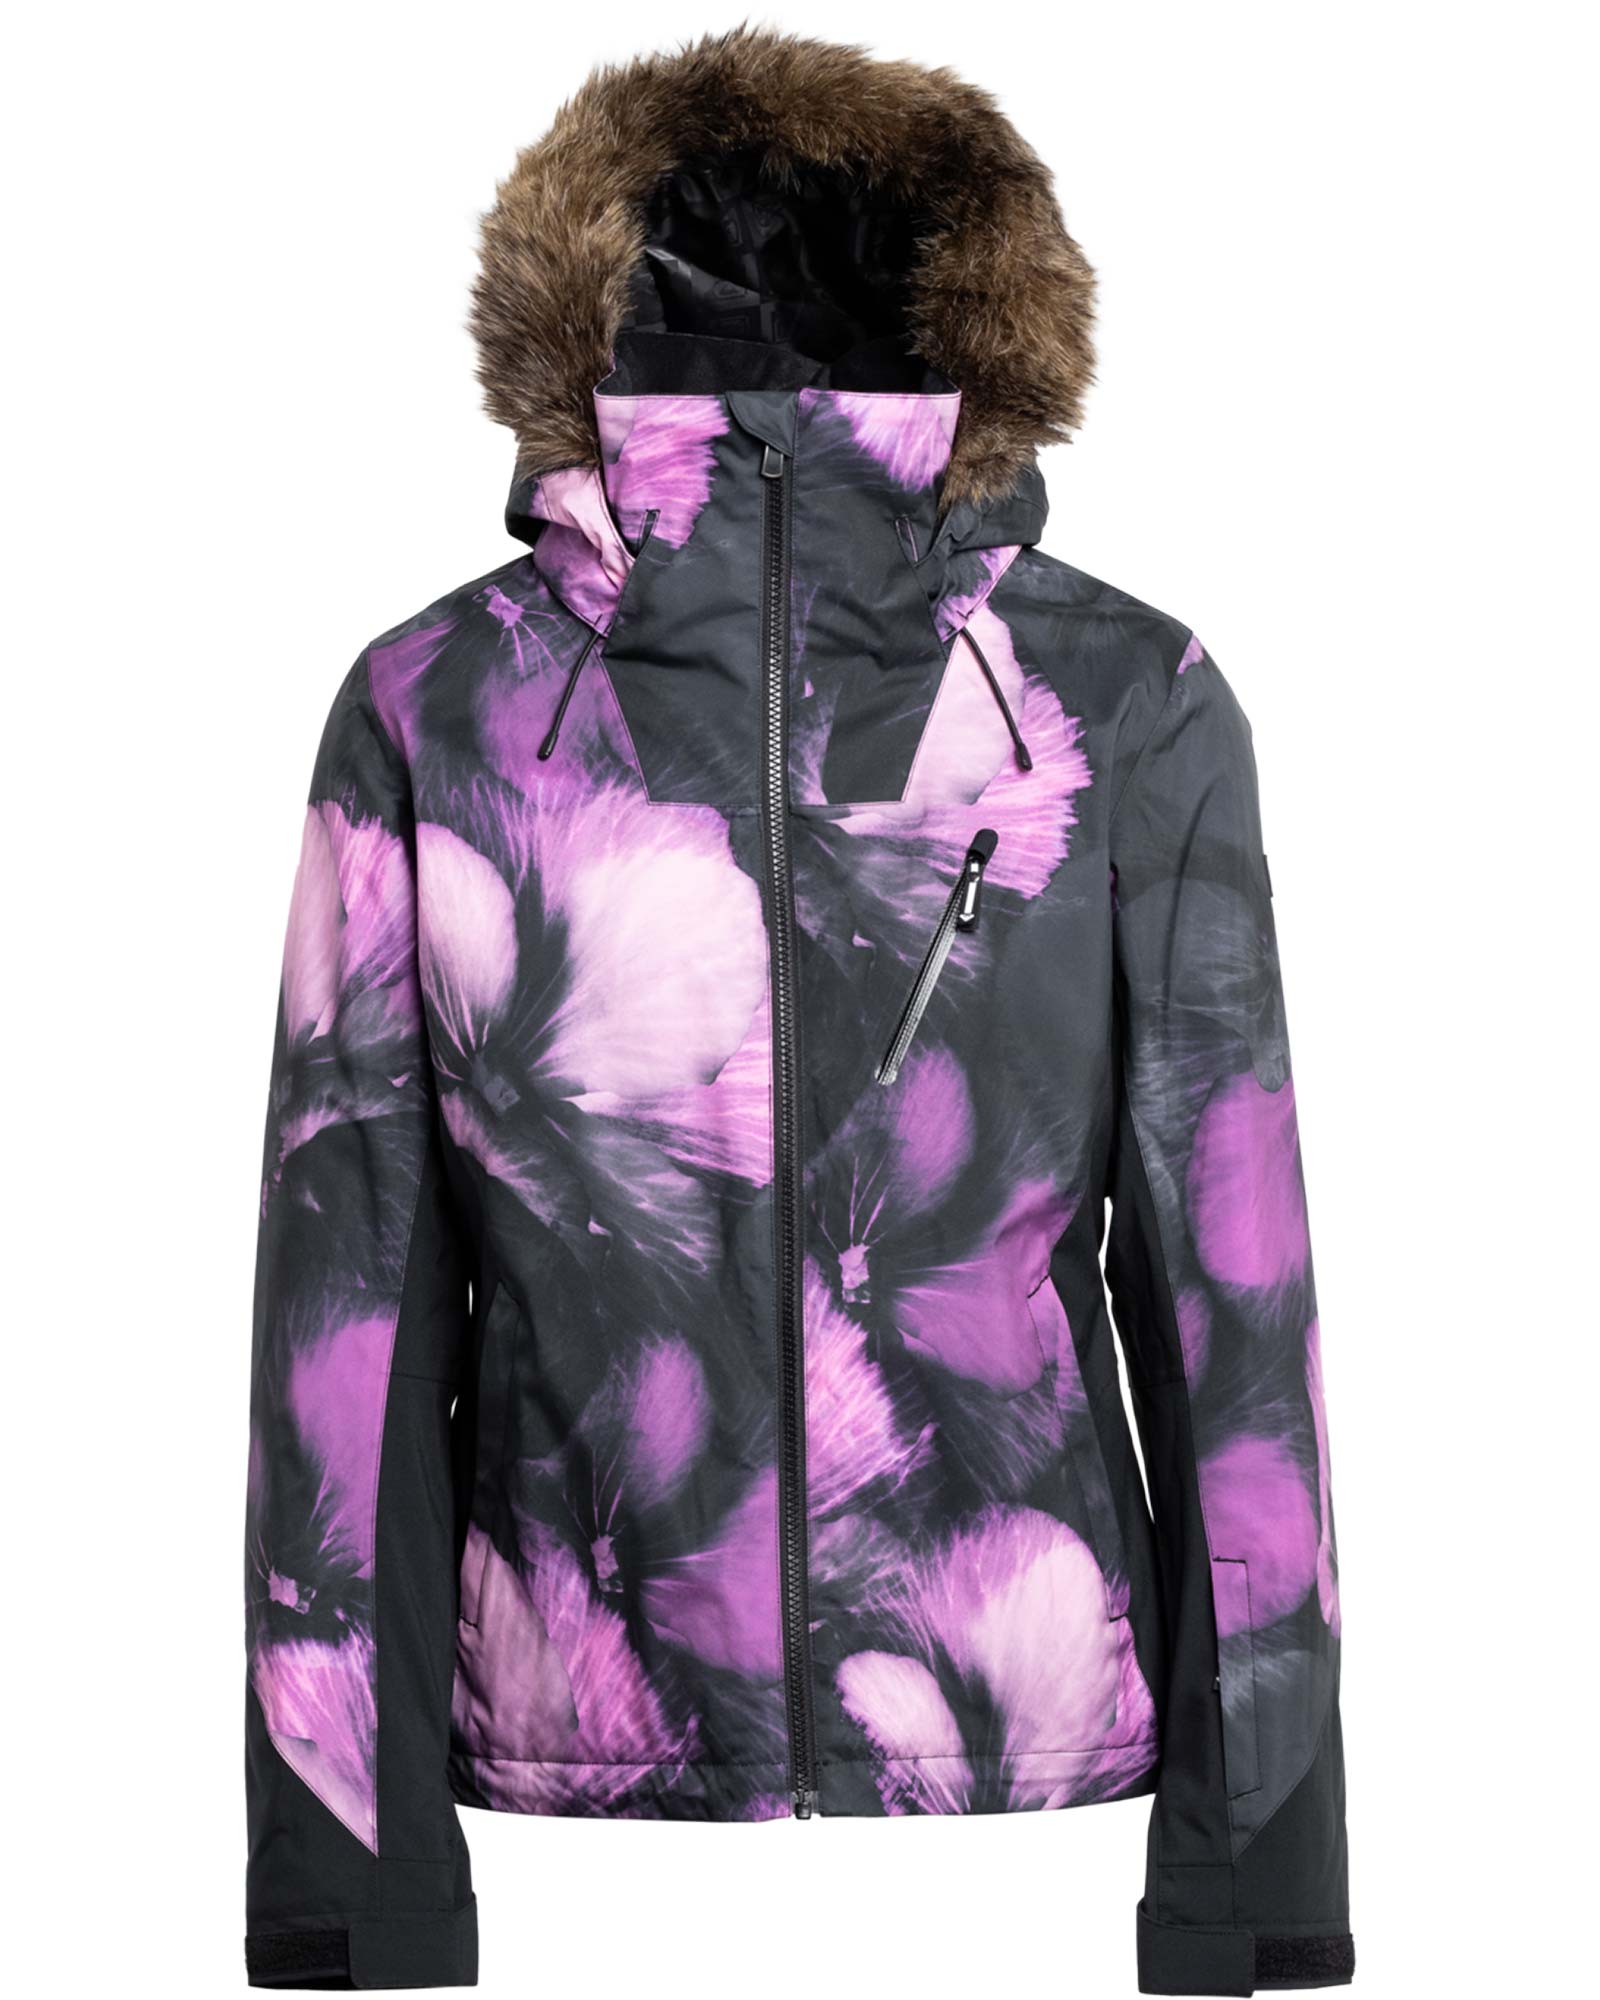 Roxy Jet Ski Premium Women’s Jacket - True Black Pansy Print L